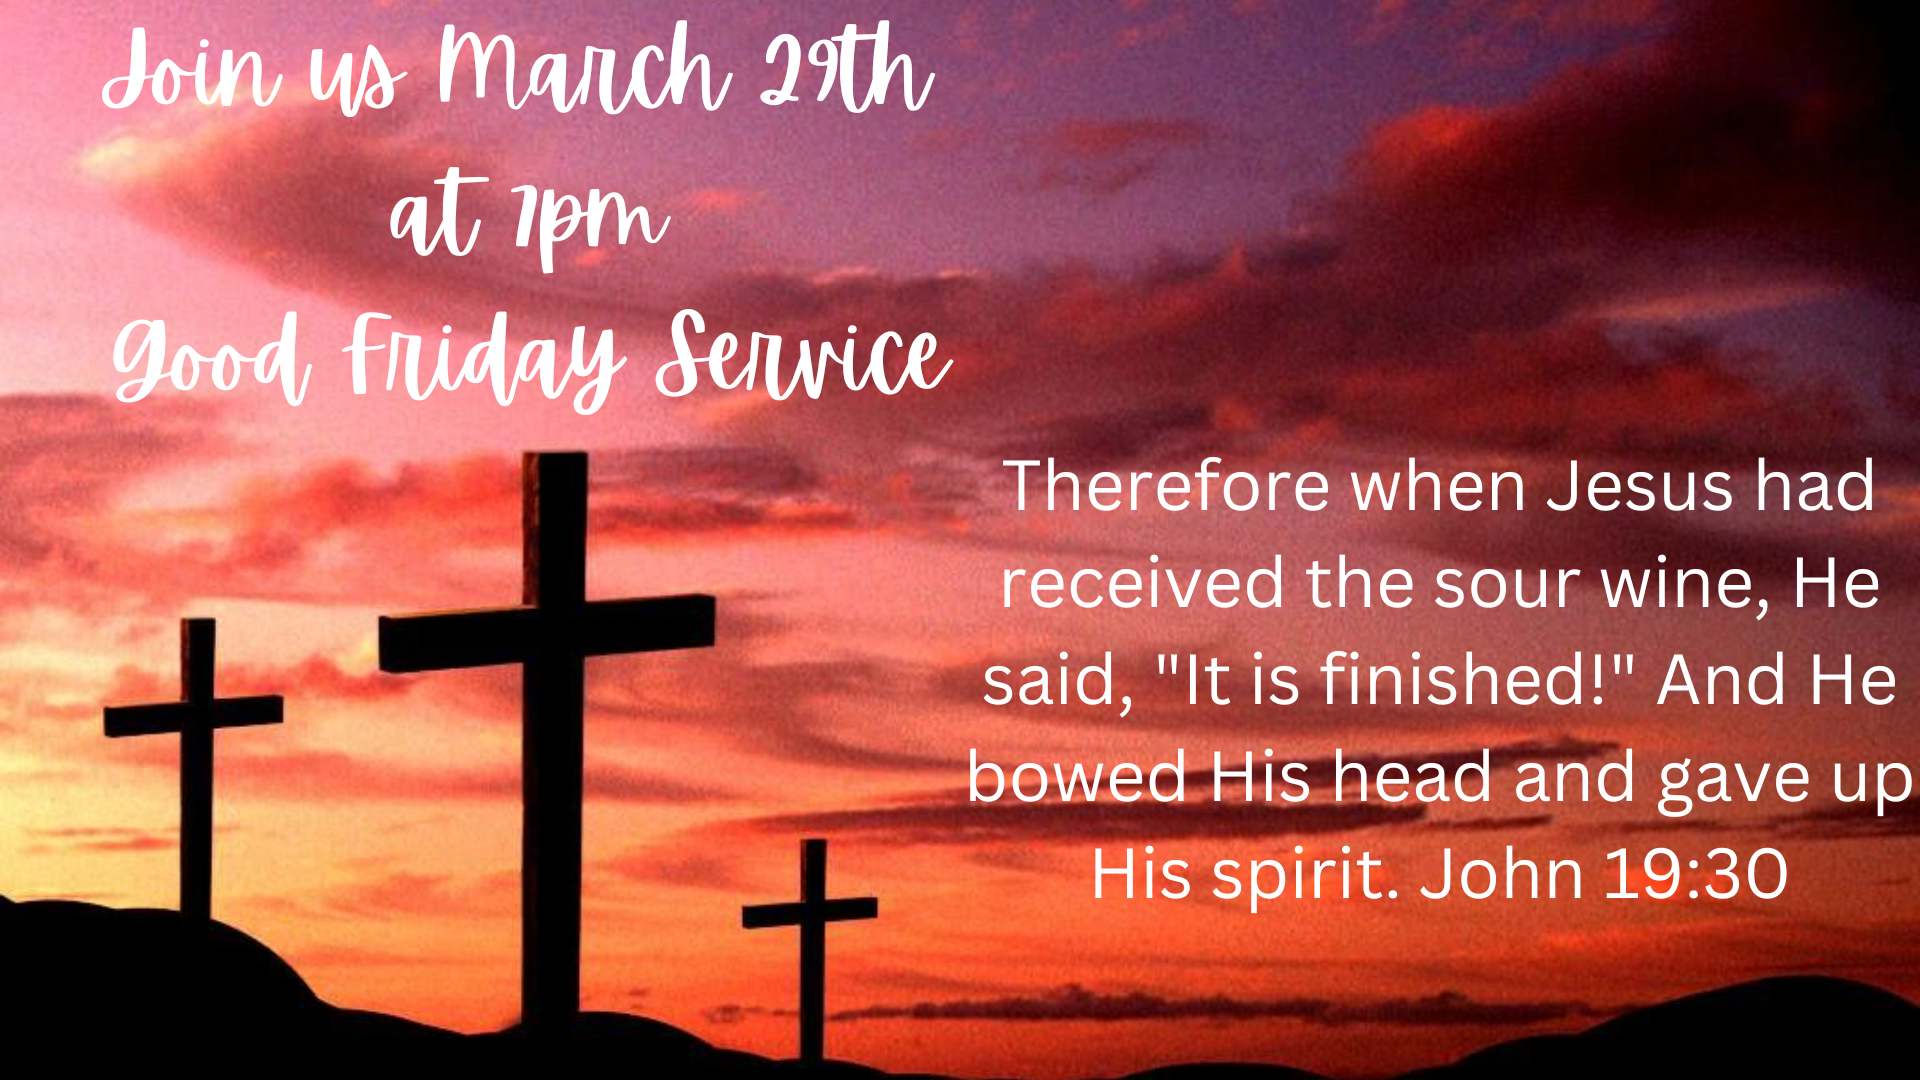 Good Friday Service April 15th at 7pm (4).png